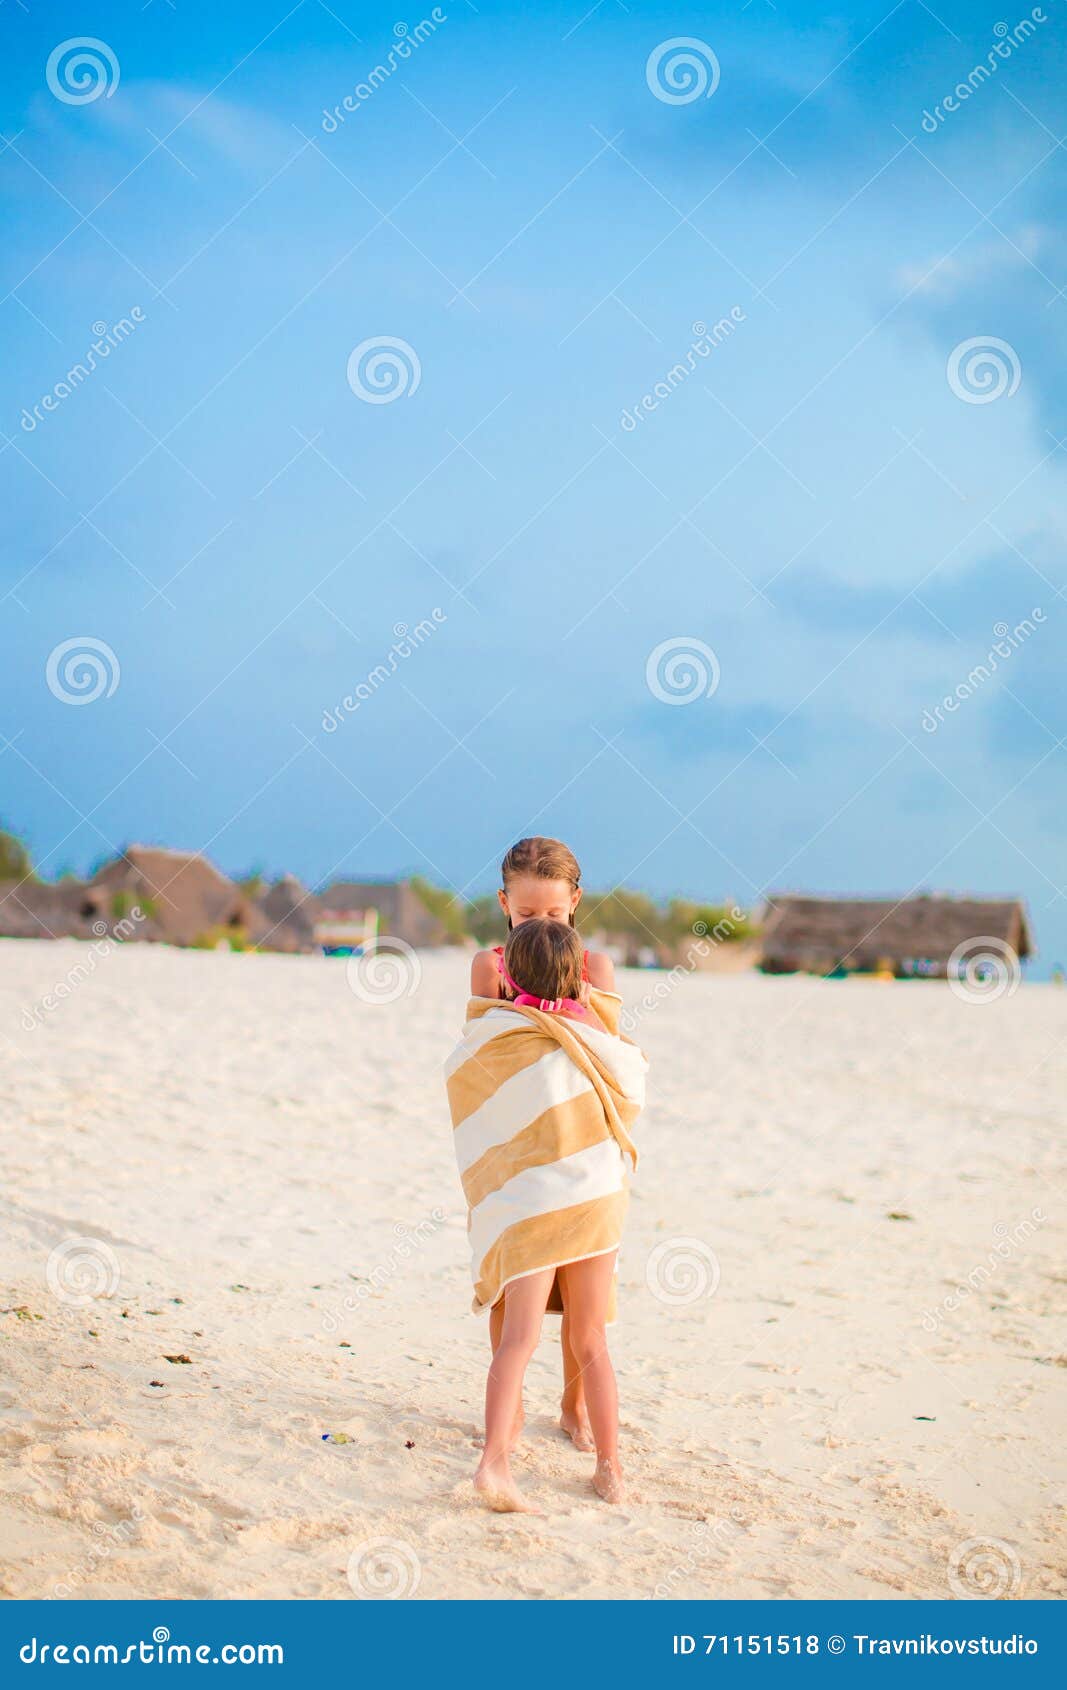 Прикрылась полотенцем. Девочка в полотенце на пляже. Фотосессии на пляже в полотенце. Ребенок в полотенце на пляже. Девушка с полотенцем на пляже.